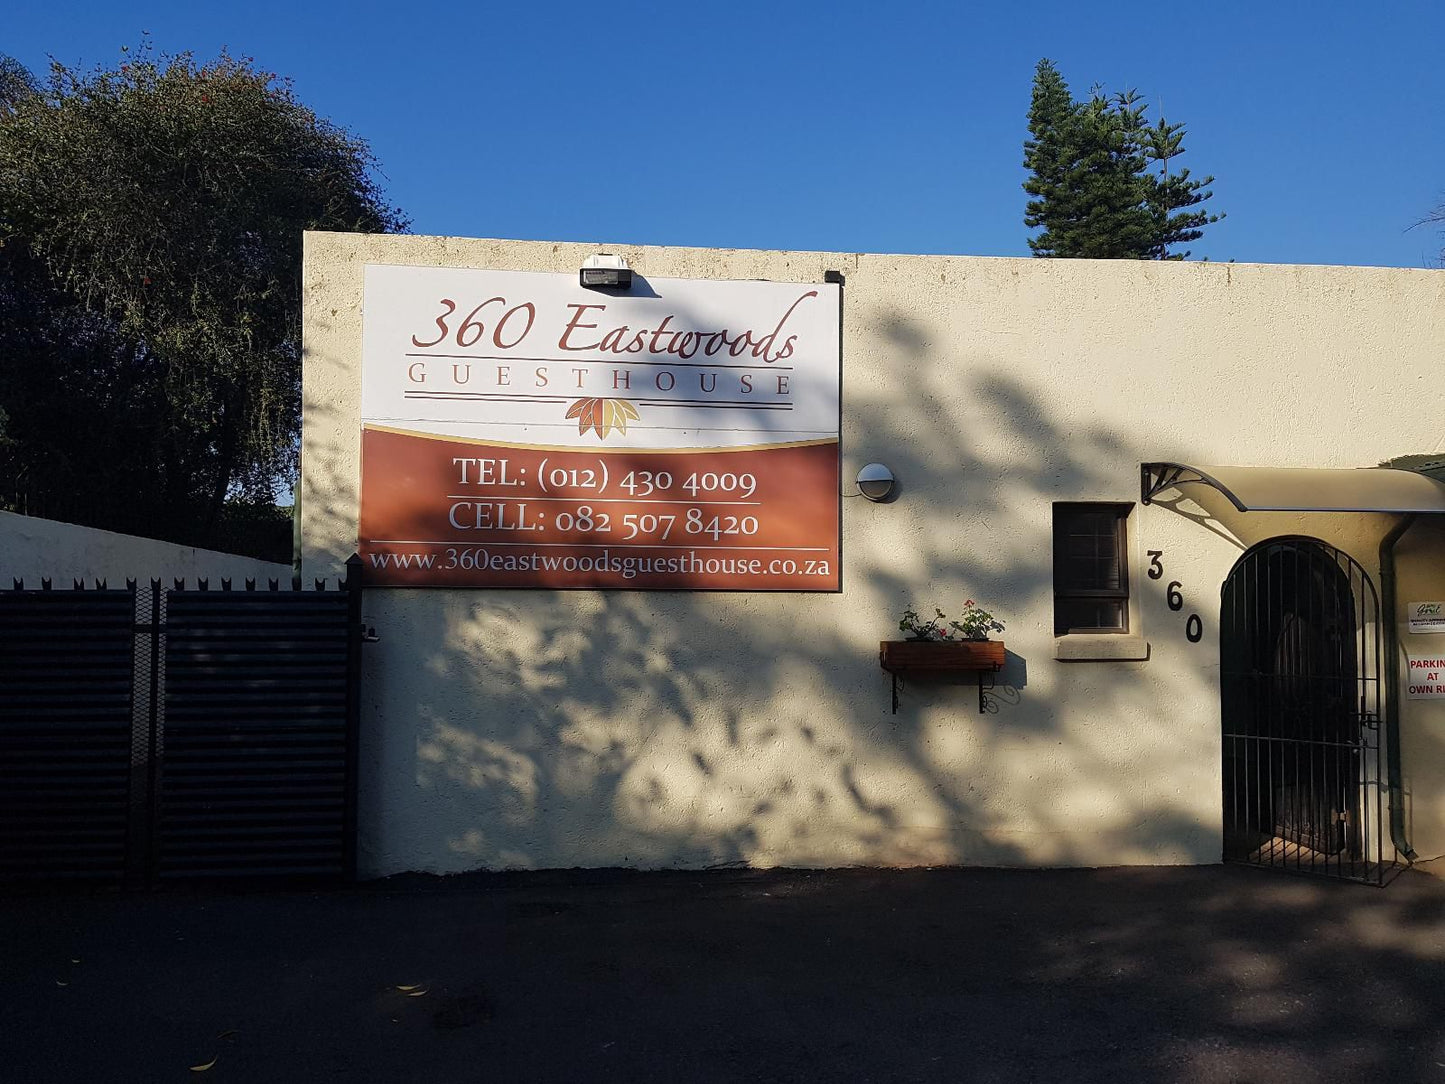 360 Eastwoods Guest House Arcadia Pretoria Tshwane Gauteng South Africa Sign